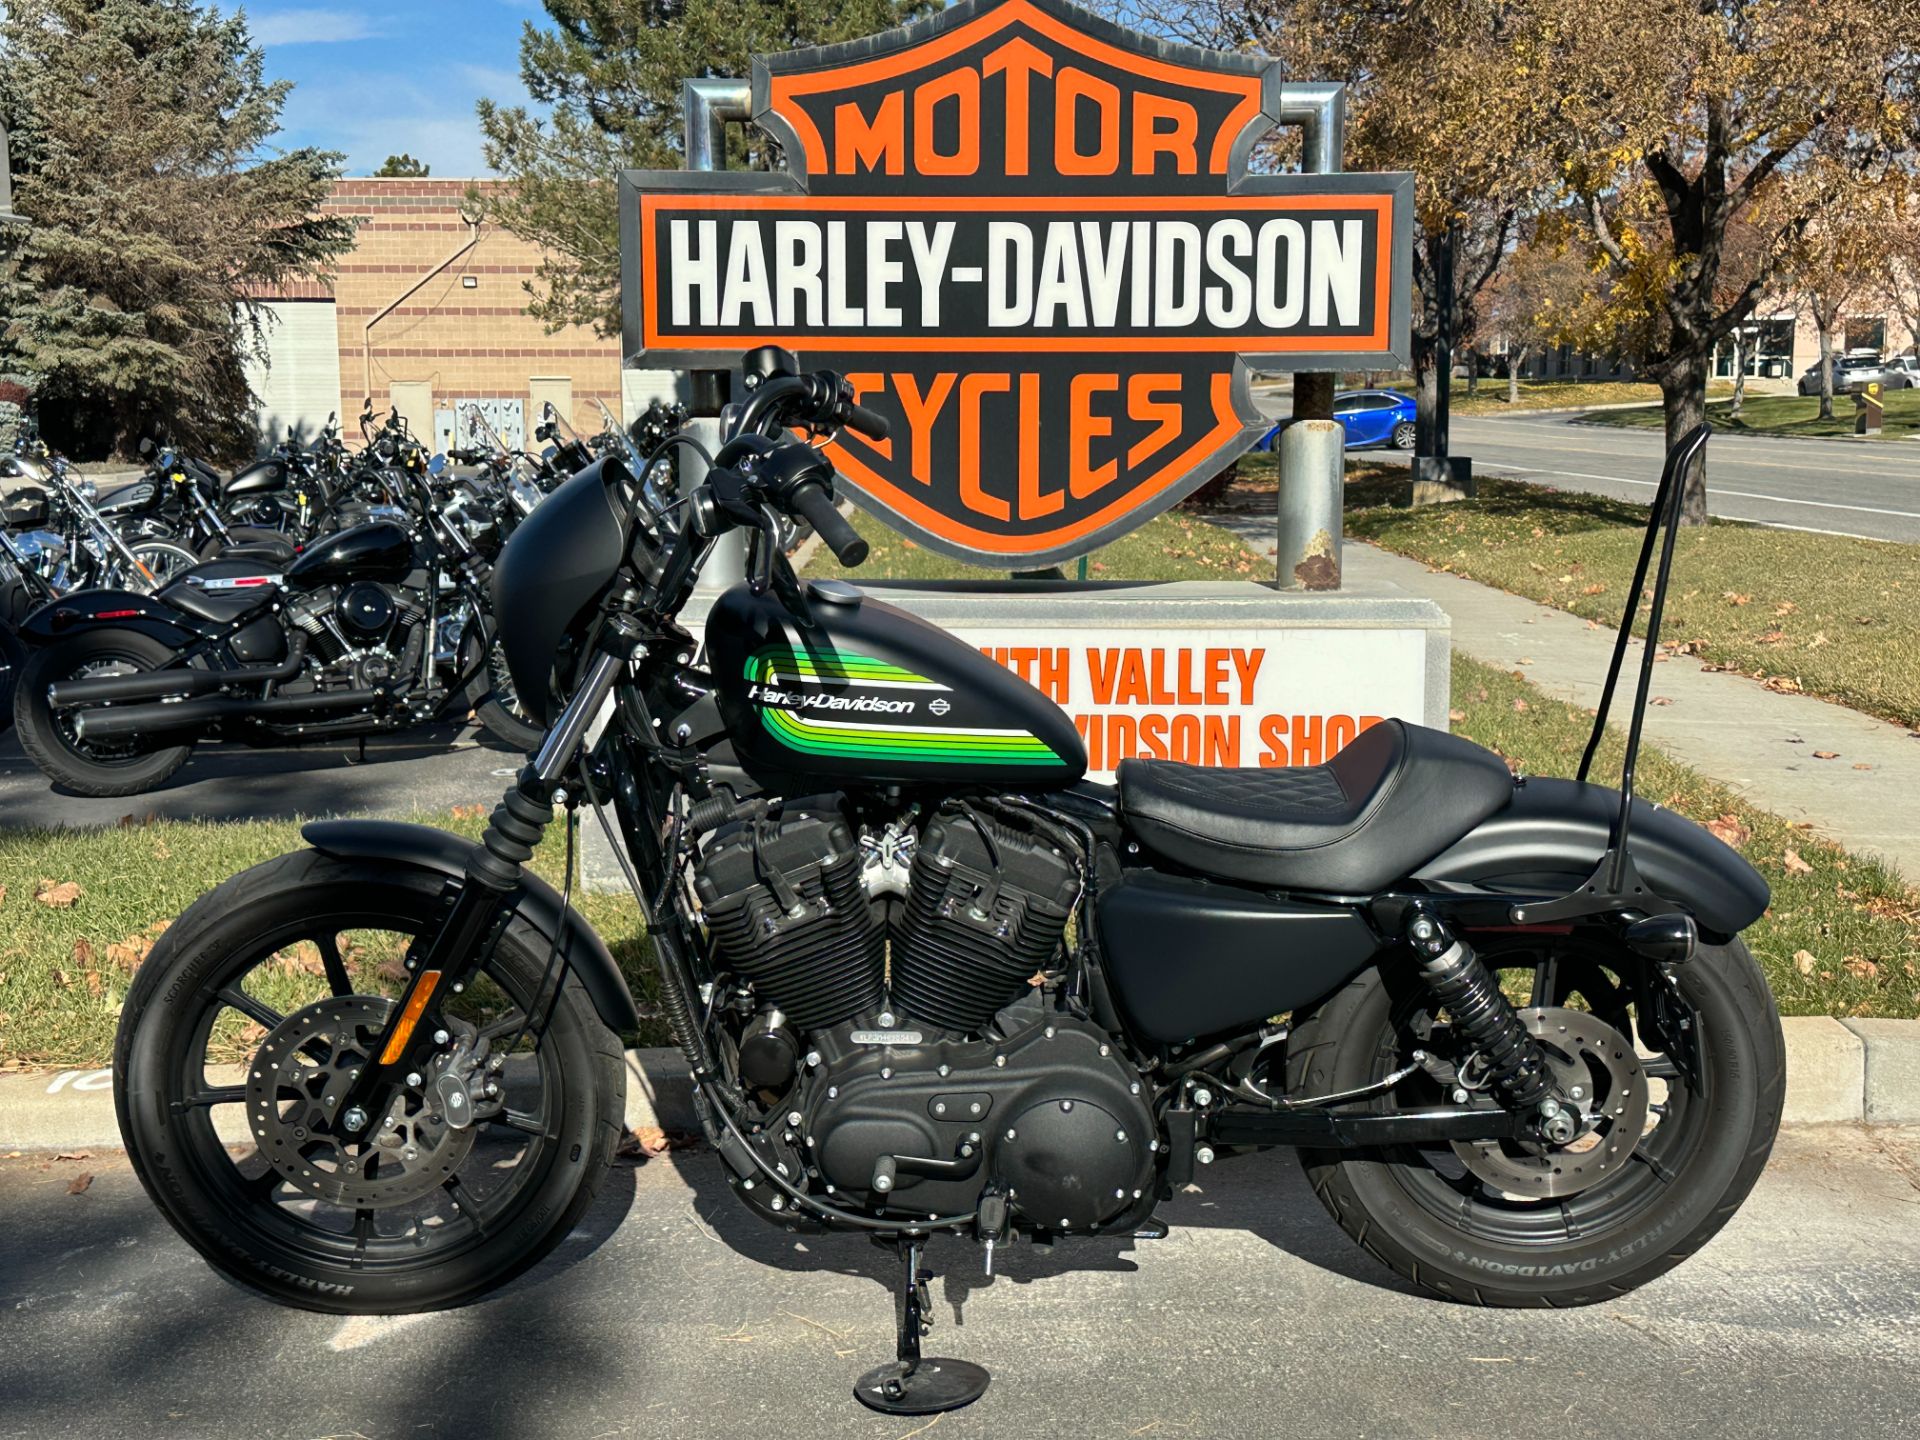 2021 Harley-Davidson Iron 1200™ in Sandy, Utah - Photo 10